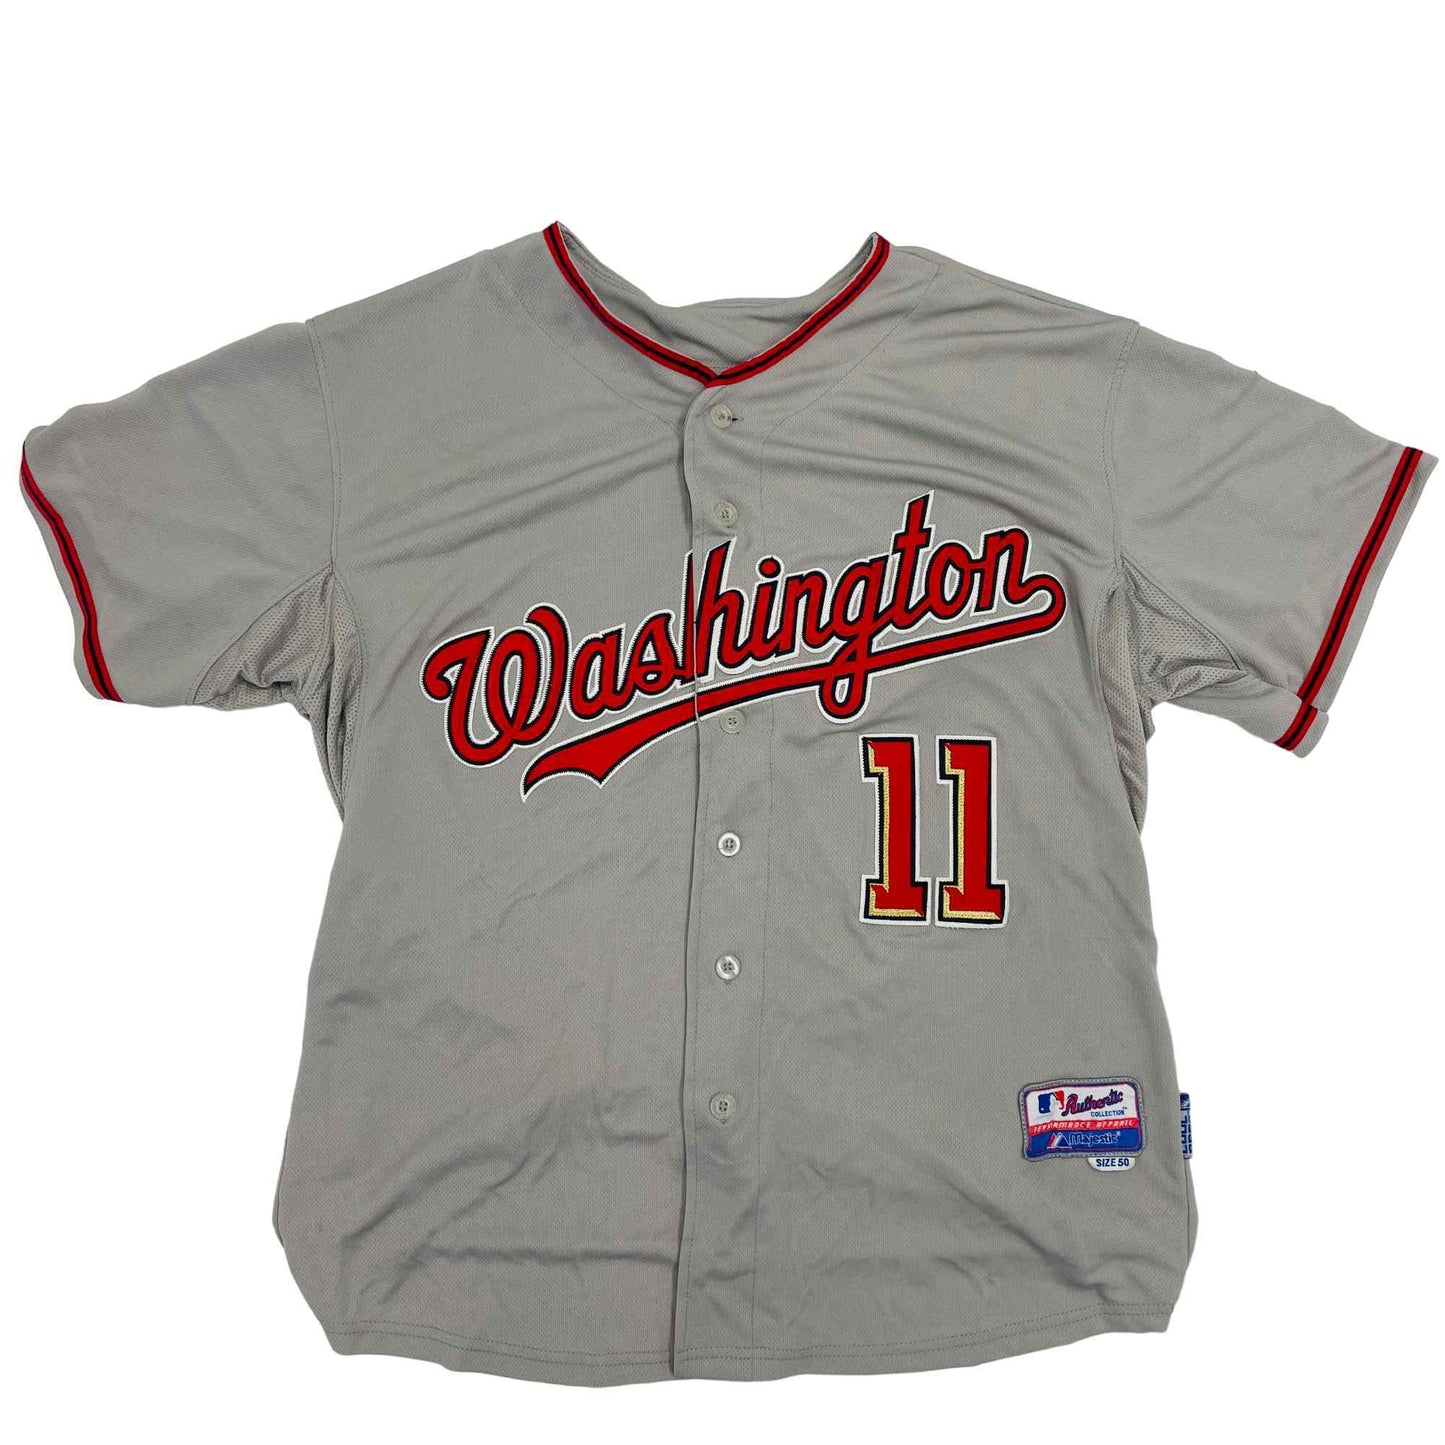 Vintage Washington Nationals MLB Baseball Majestic T-Shirt Jersey Size Lg